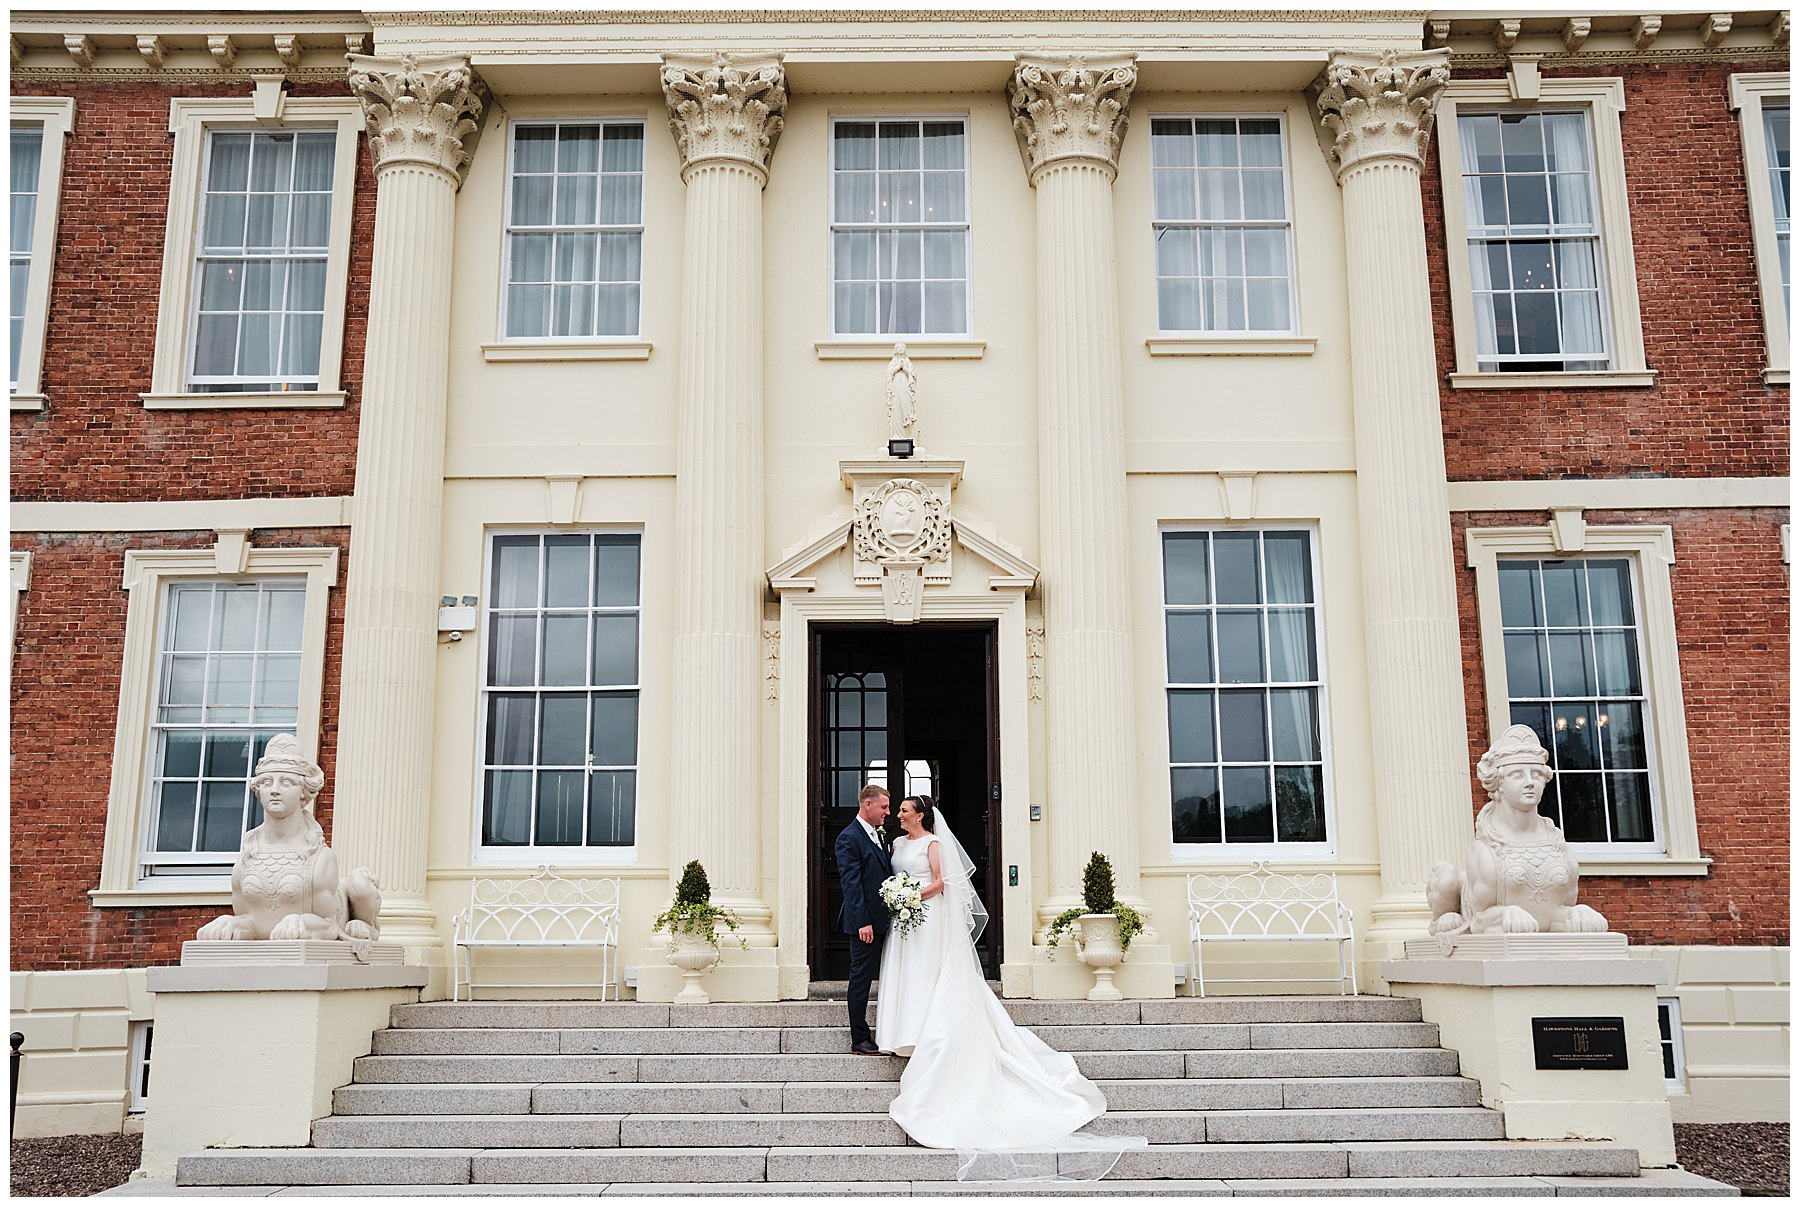 Hawkstone Hall is the most idyllic backdrop for a wedding - Hawkstone Hall in Shrewsbury by Documentary Wedding Photographer Stuart James